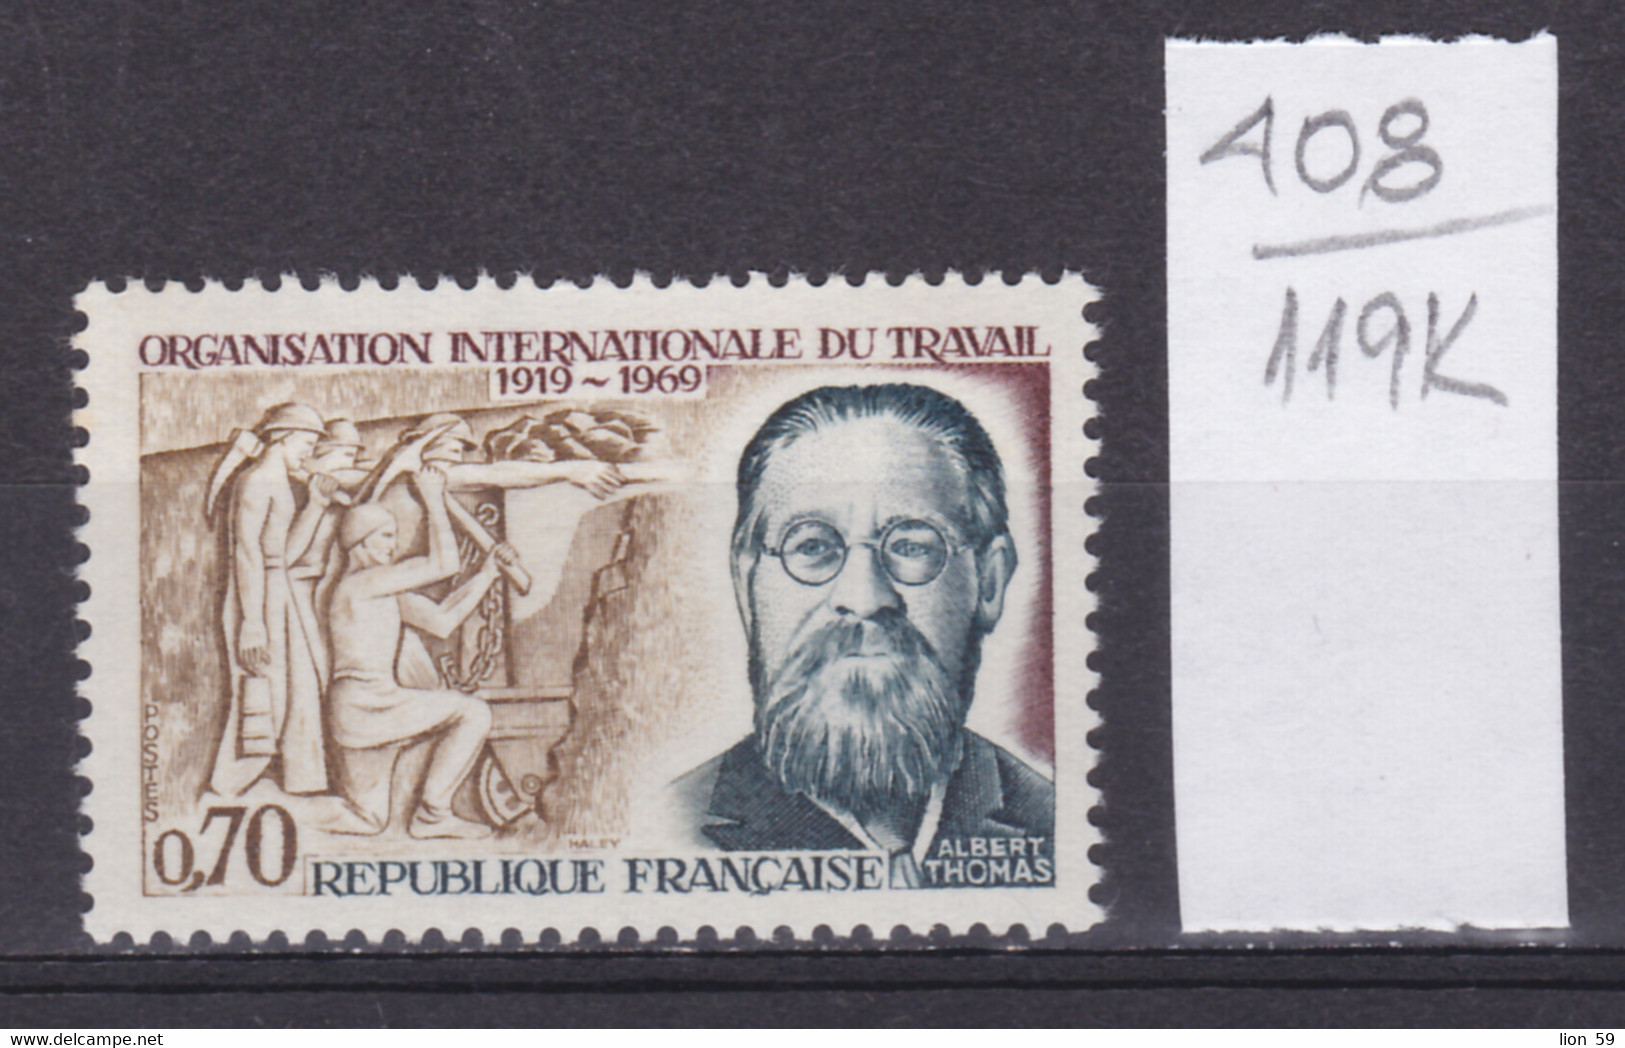 119K408 / France 1969 Michel Nr. 1669 MNH (**) ILO International Labor Organization 1919-1969 Albert Thomas - Director - IAO